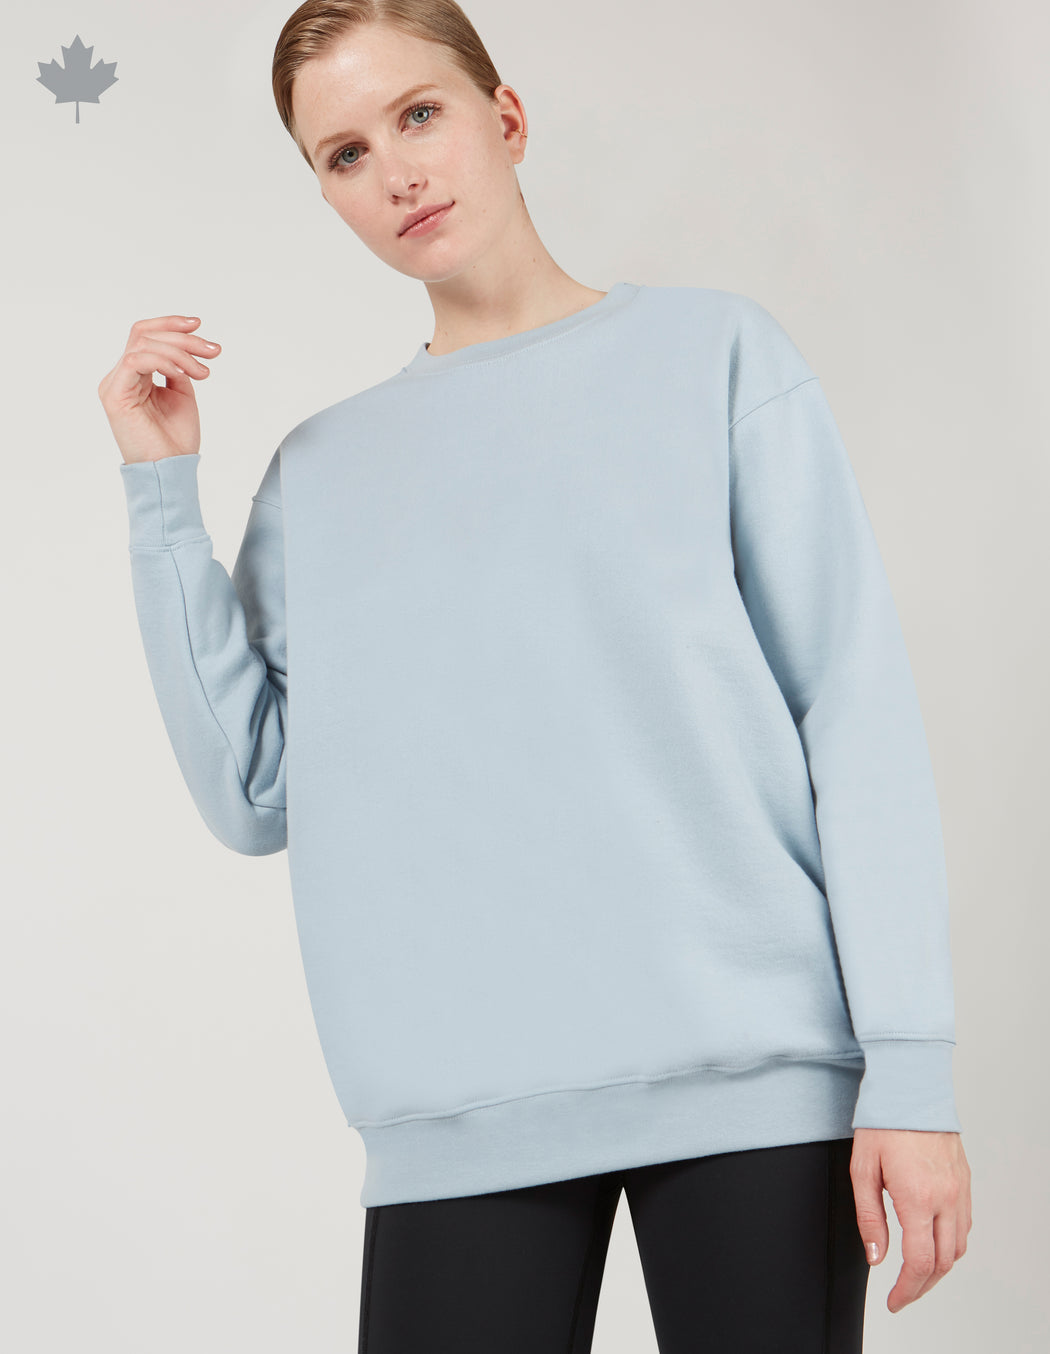 Women's Solid LONG Sweatshirt - Made in Canada